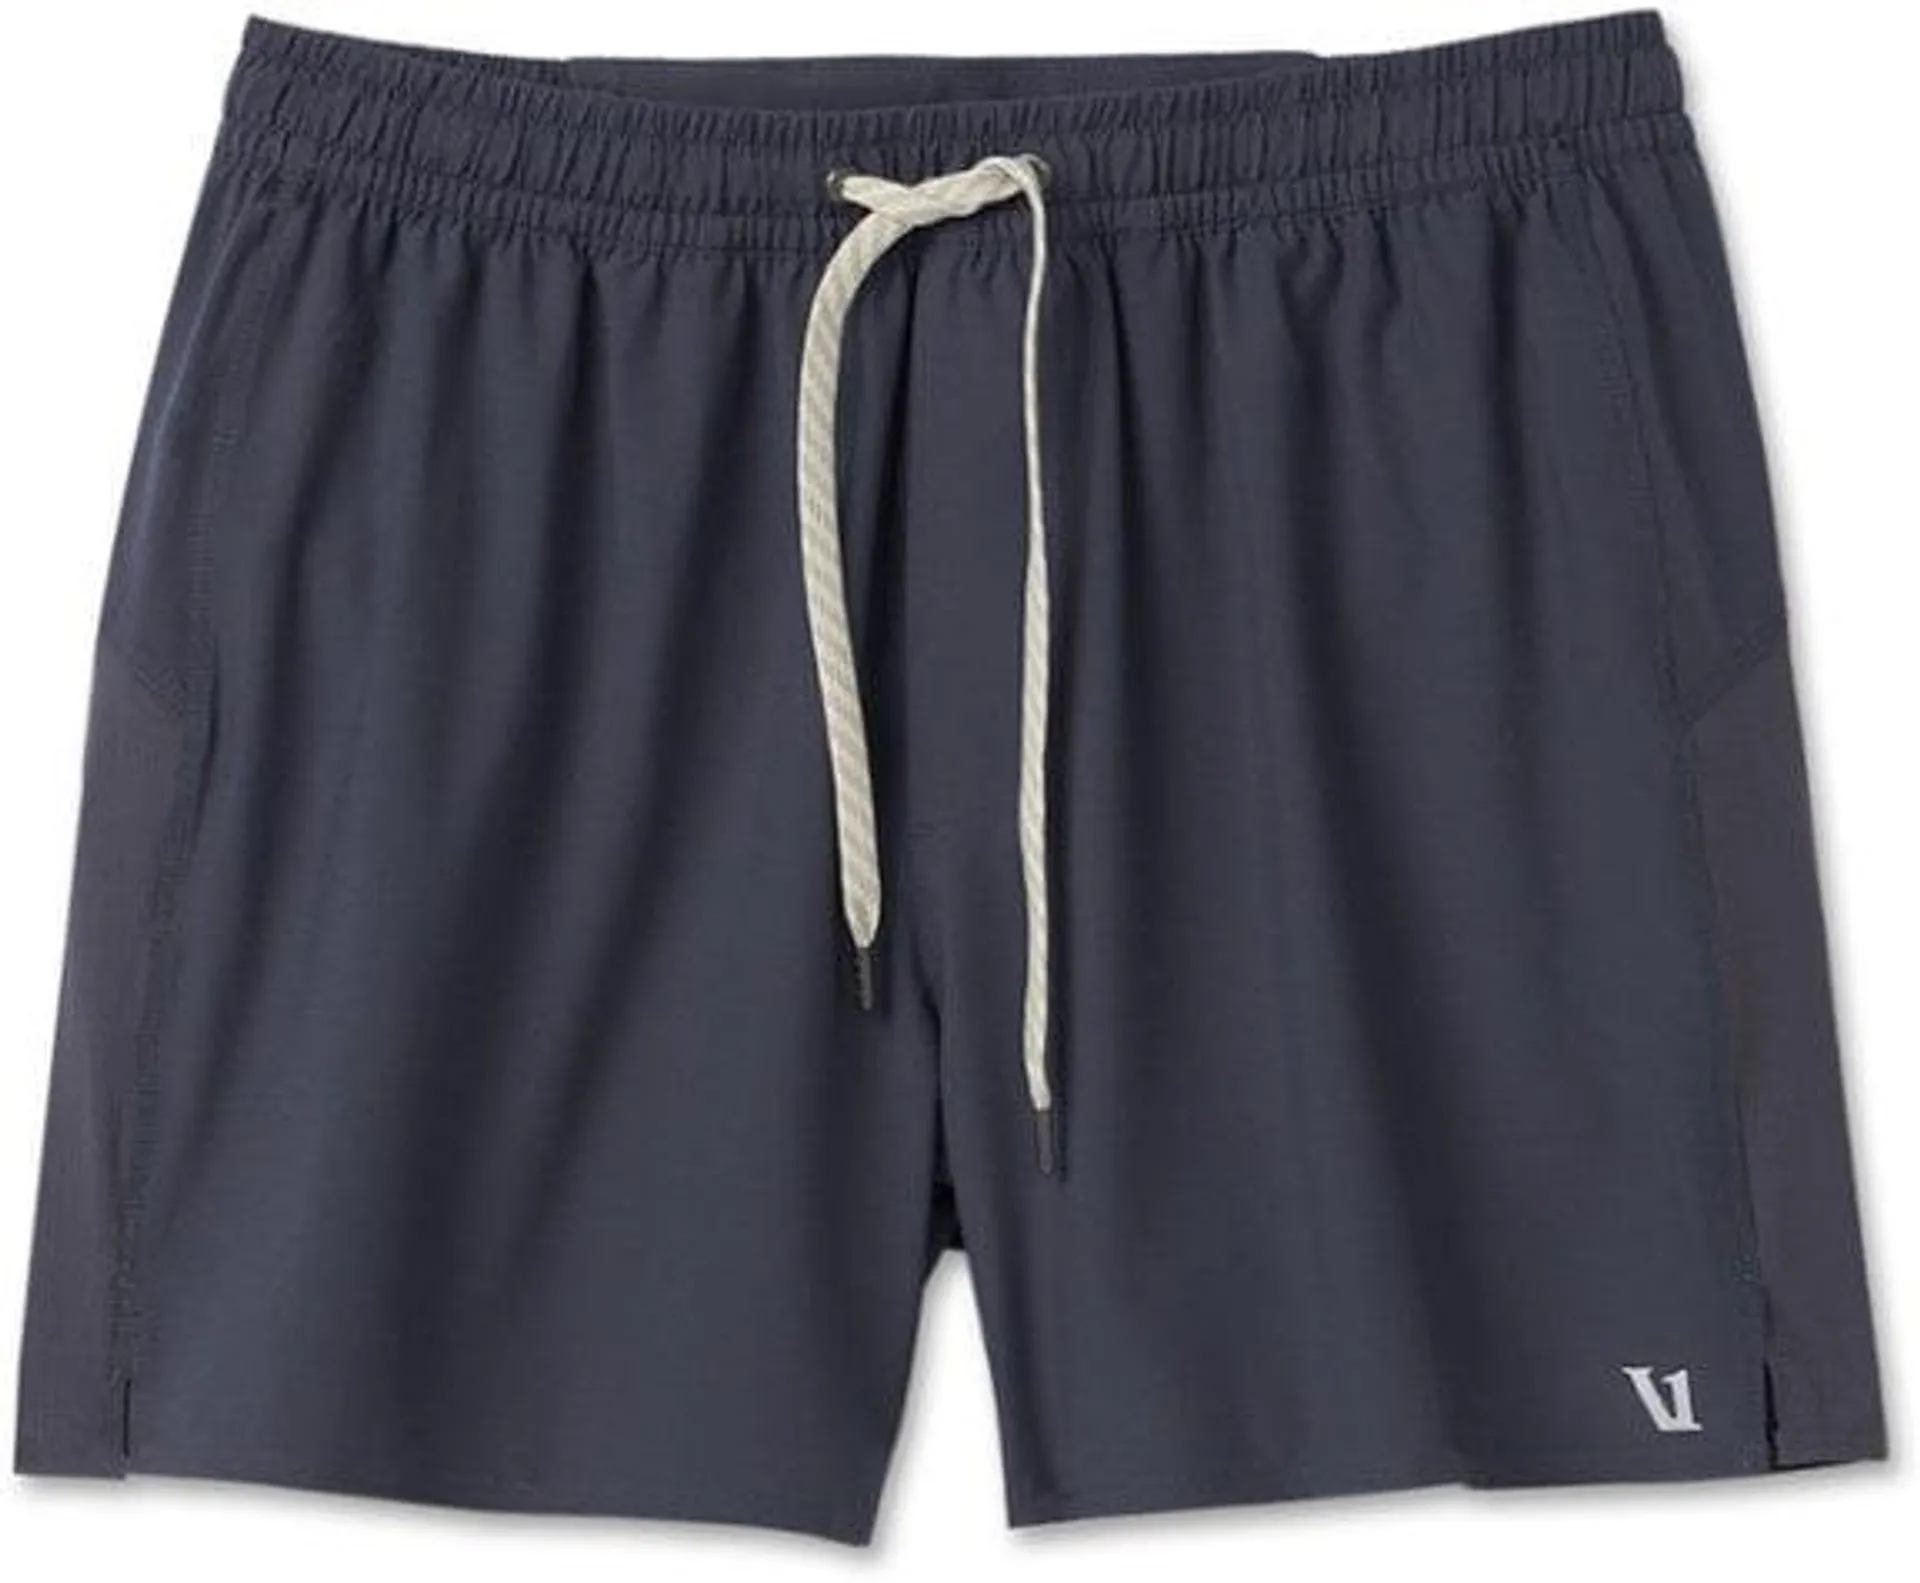 Vuori Course Run Shorts - Men's